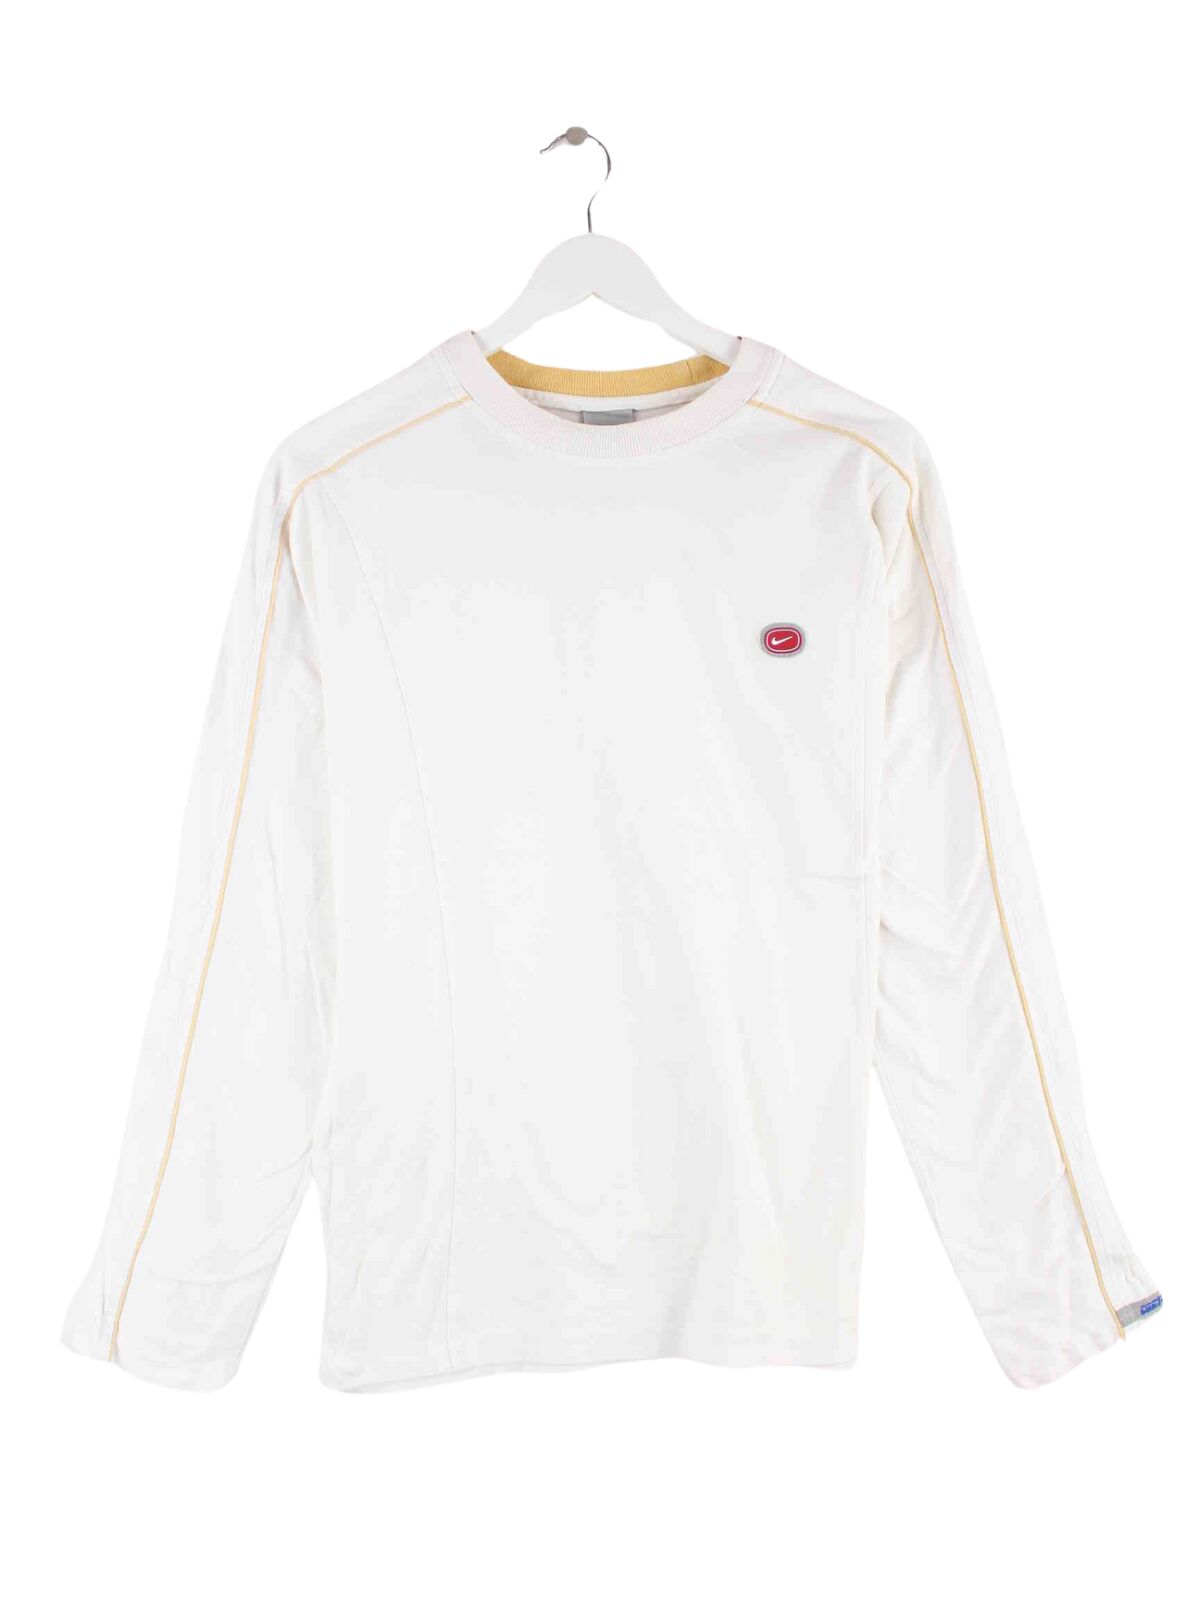 Nike 00s Sweatshirt Weiß S (front image)